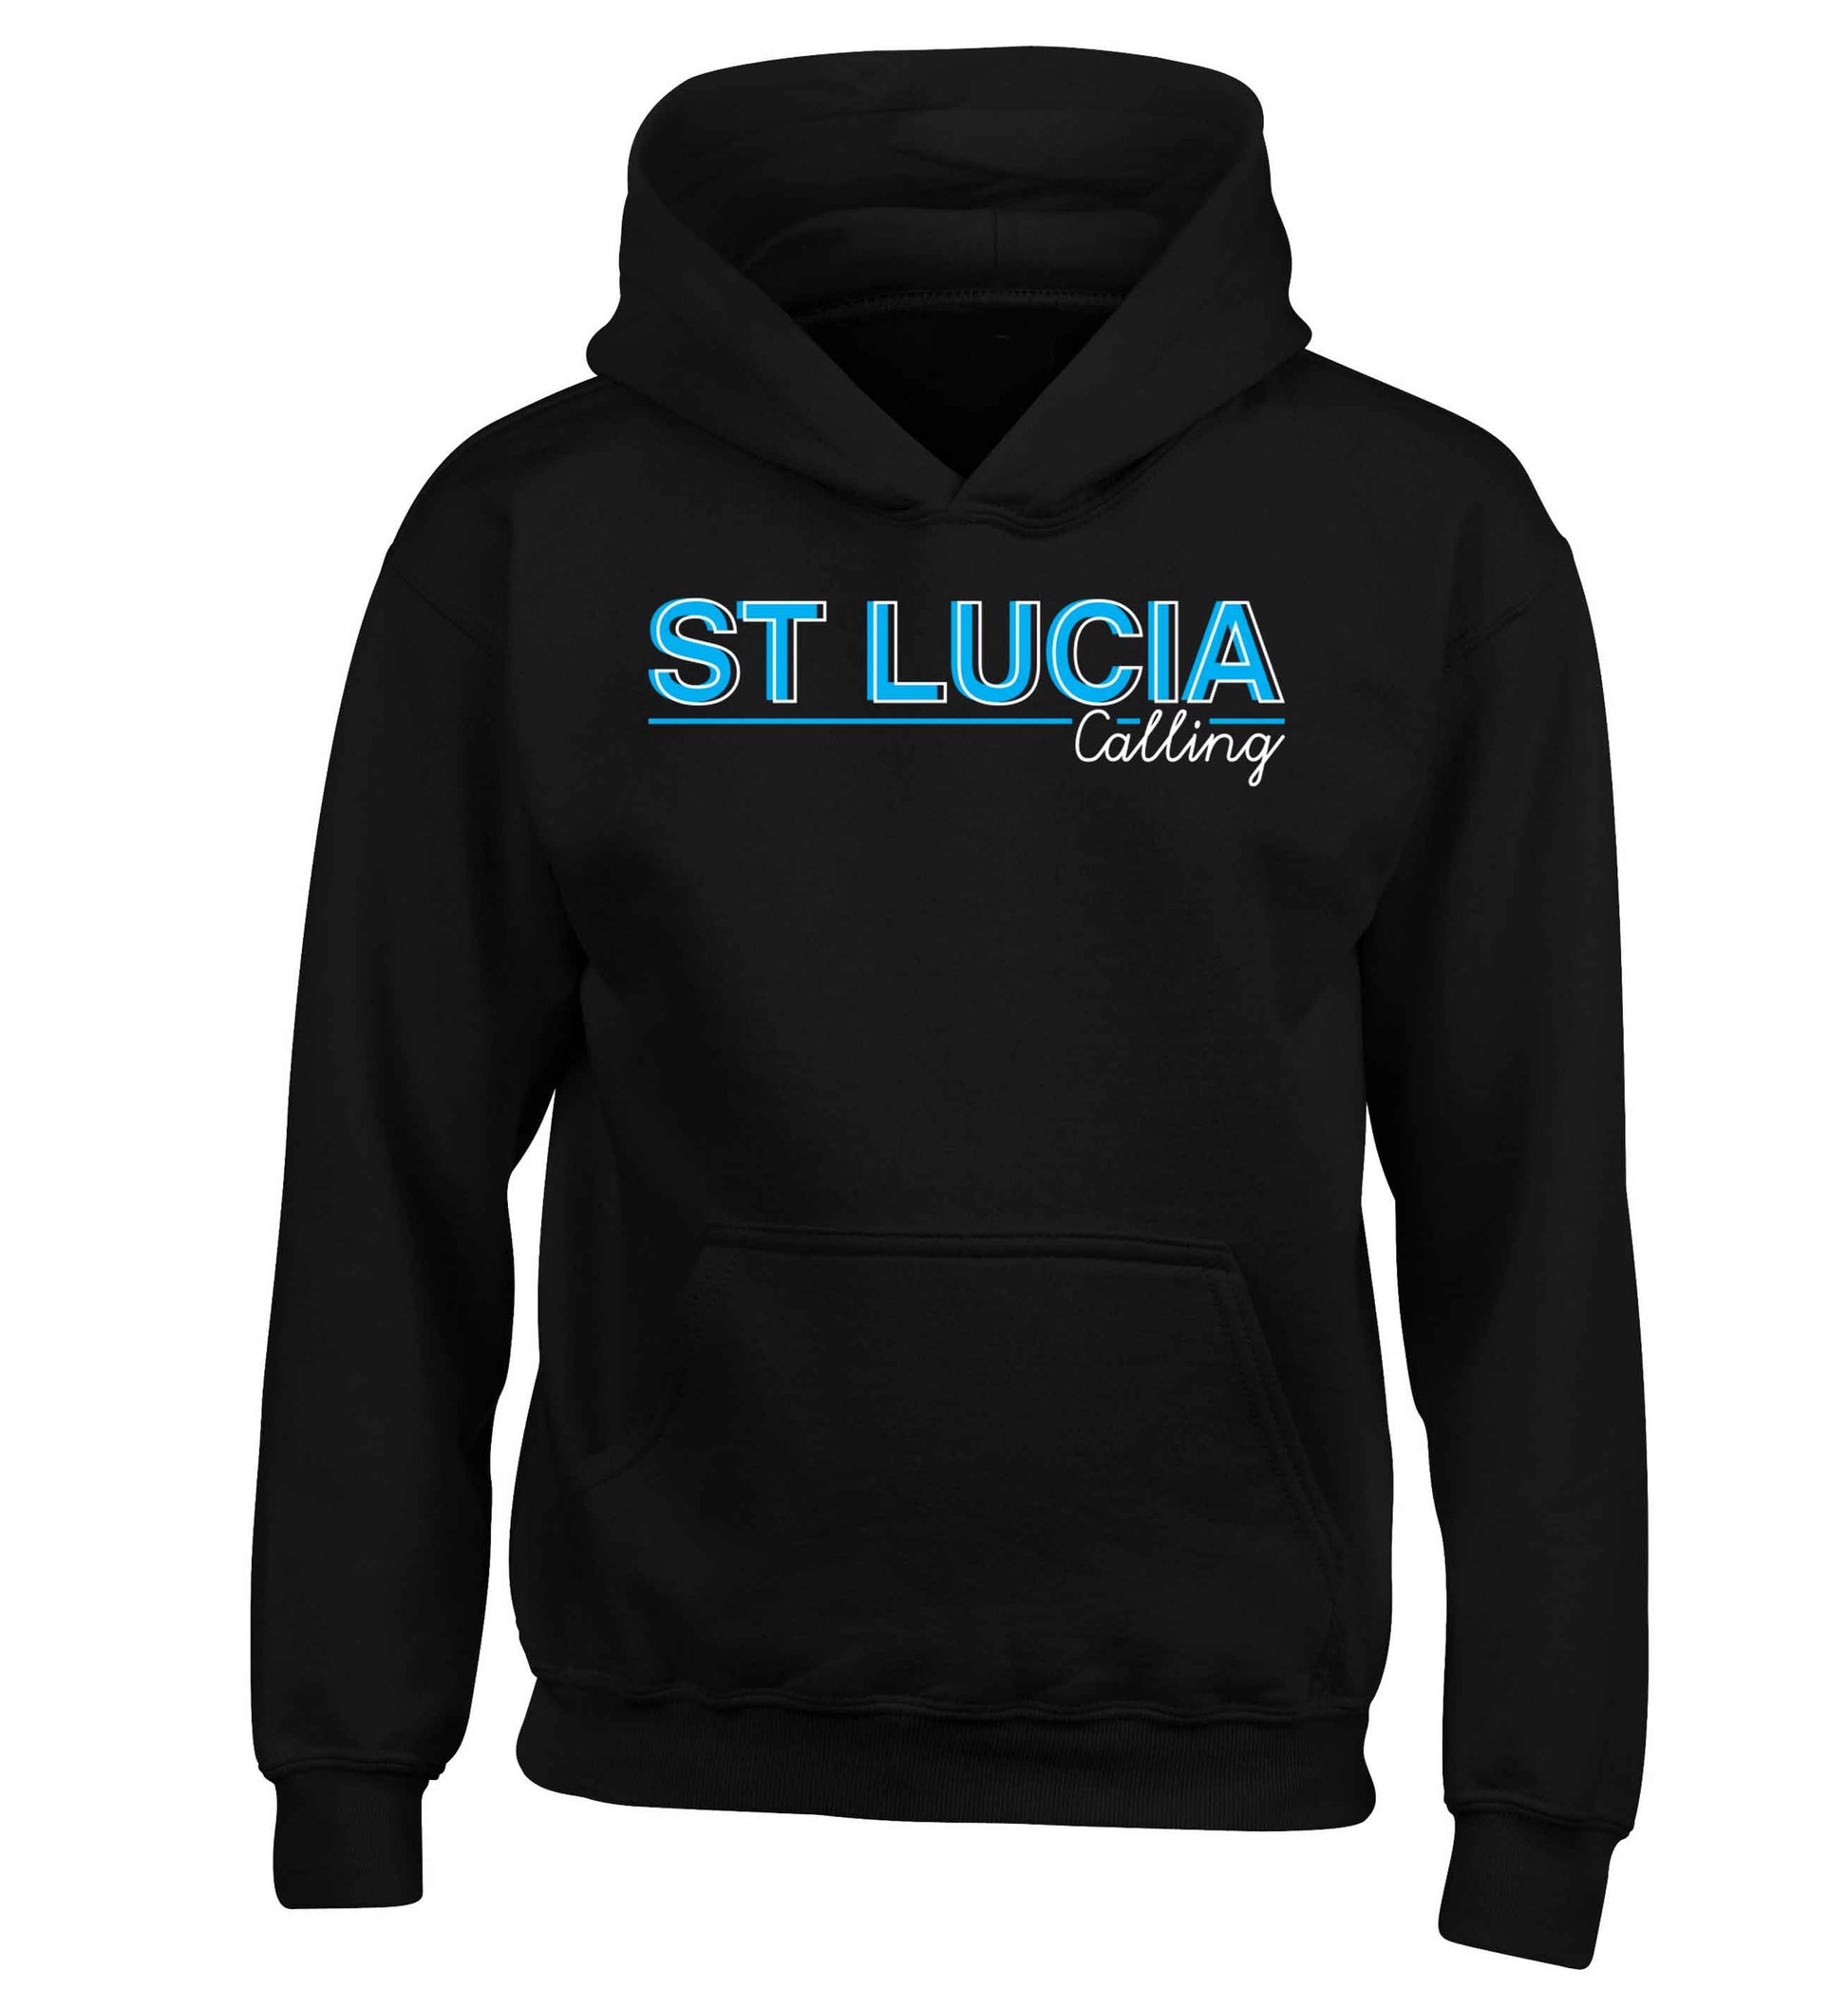 St Lucia calling children's black hoodie 12-13 Years